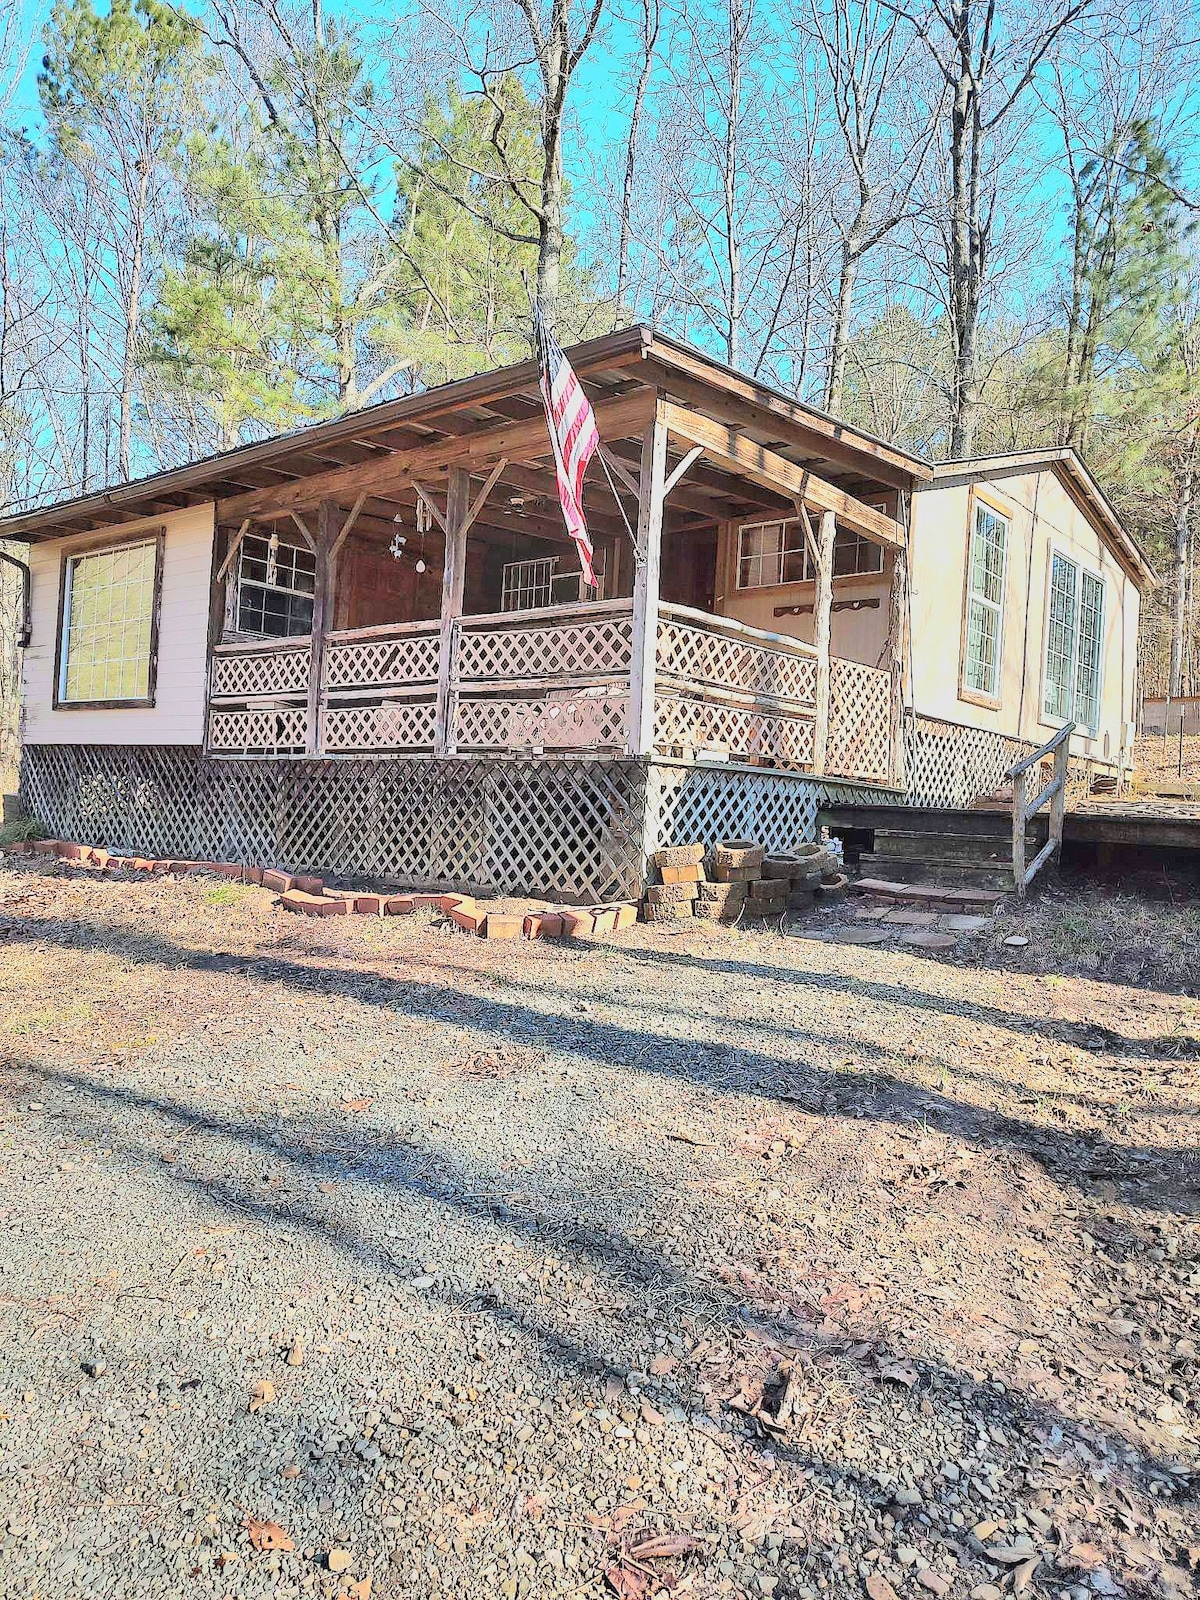 Henry 's Woodland Cabin